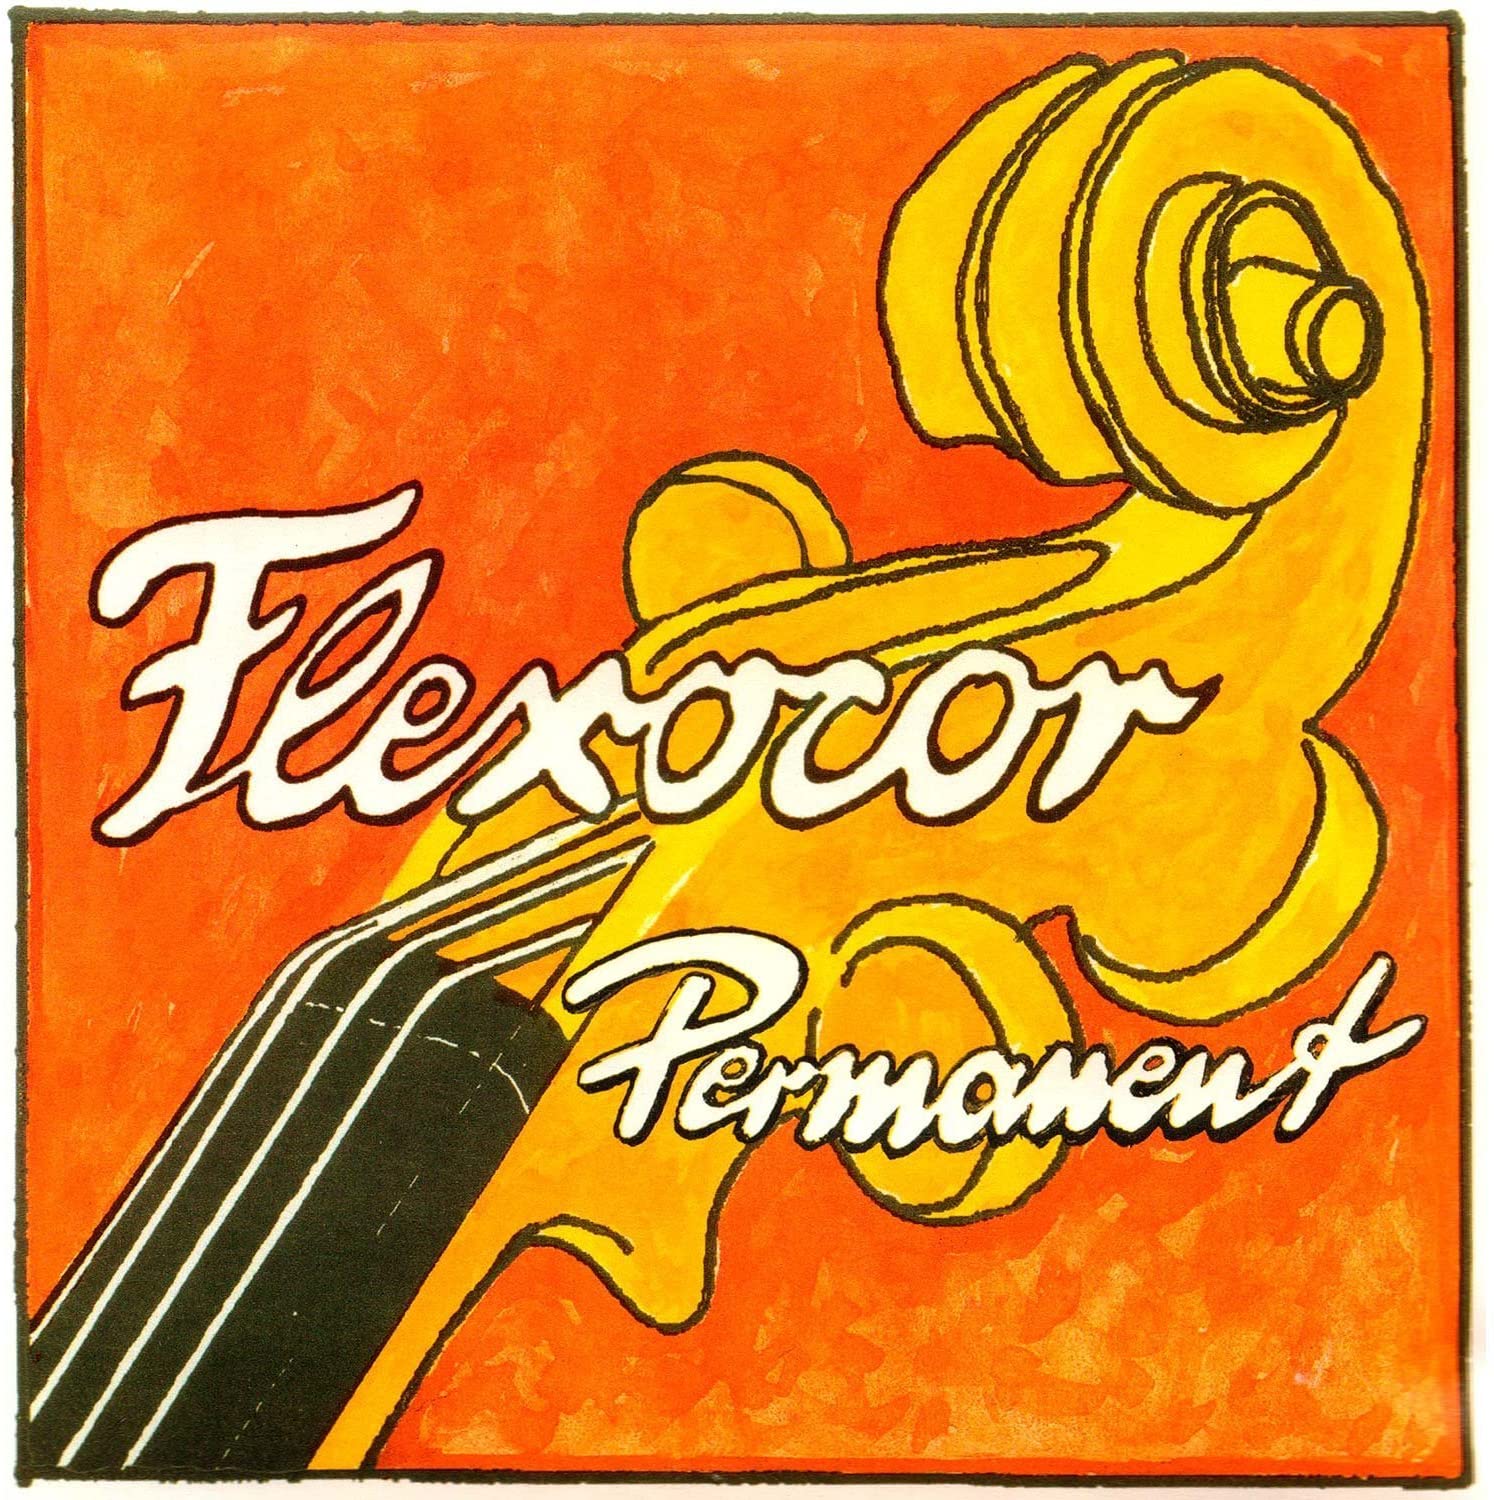 Pirastro Flexocor Permanent Violin A String